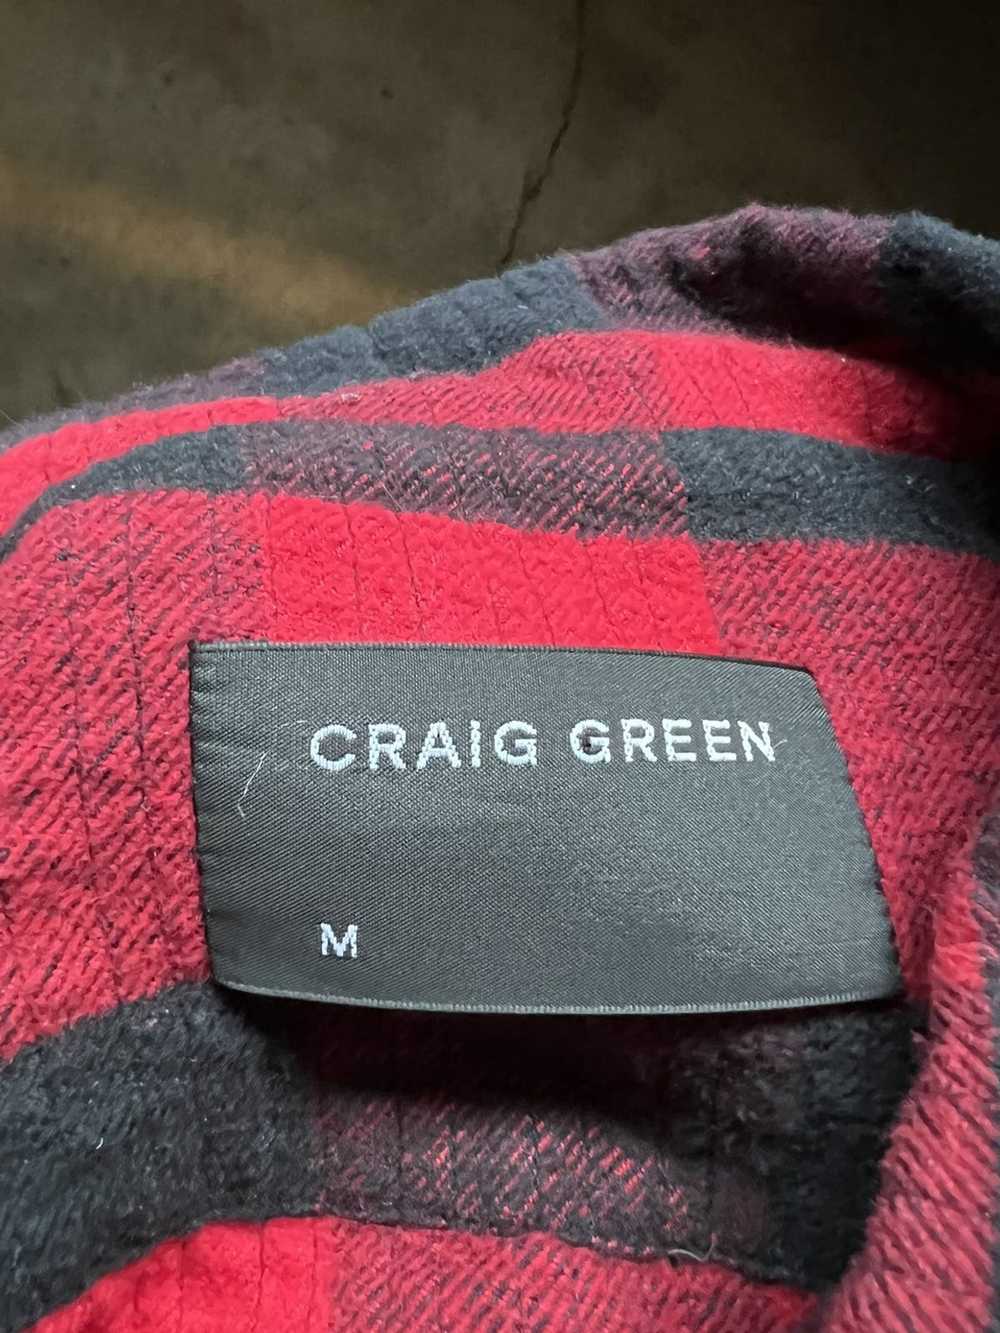 Craig Green Craig Green Plaid Work Jacket - image 3